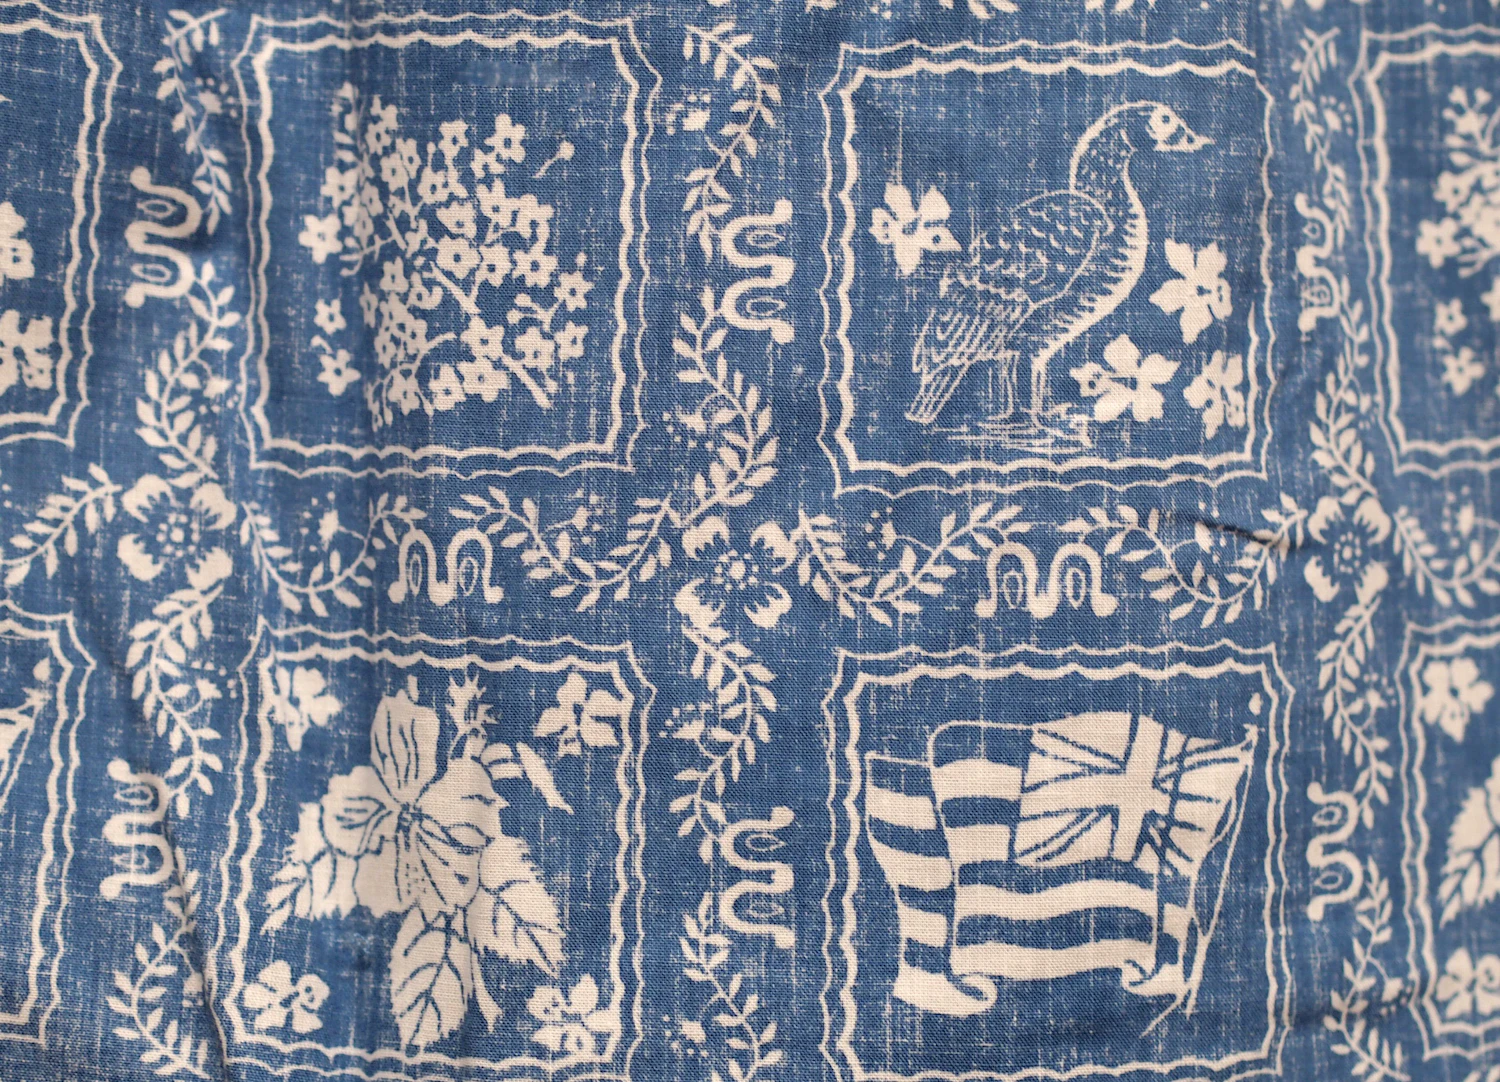 LAHAINA SAILOR's Spooner Kloth, featuring the Hawaiian state flag, Nene, Kukui, and hibiscus flower